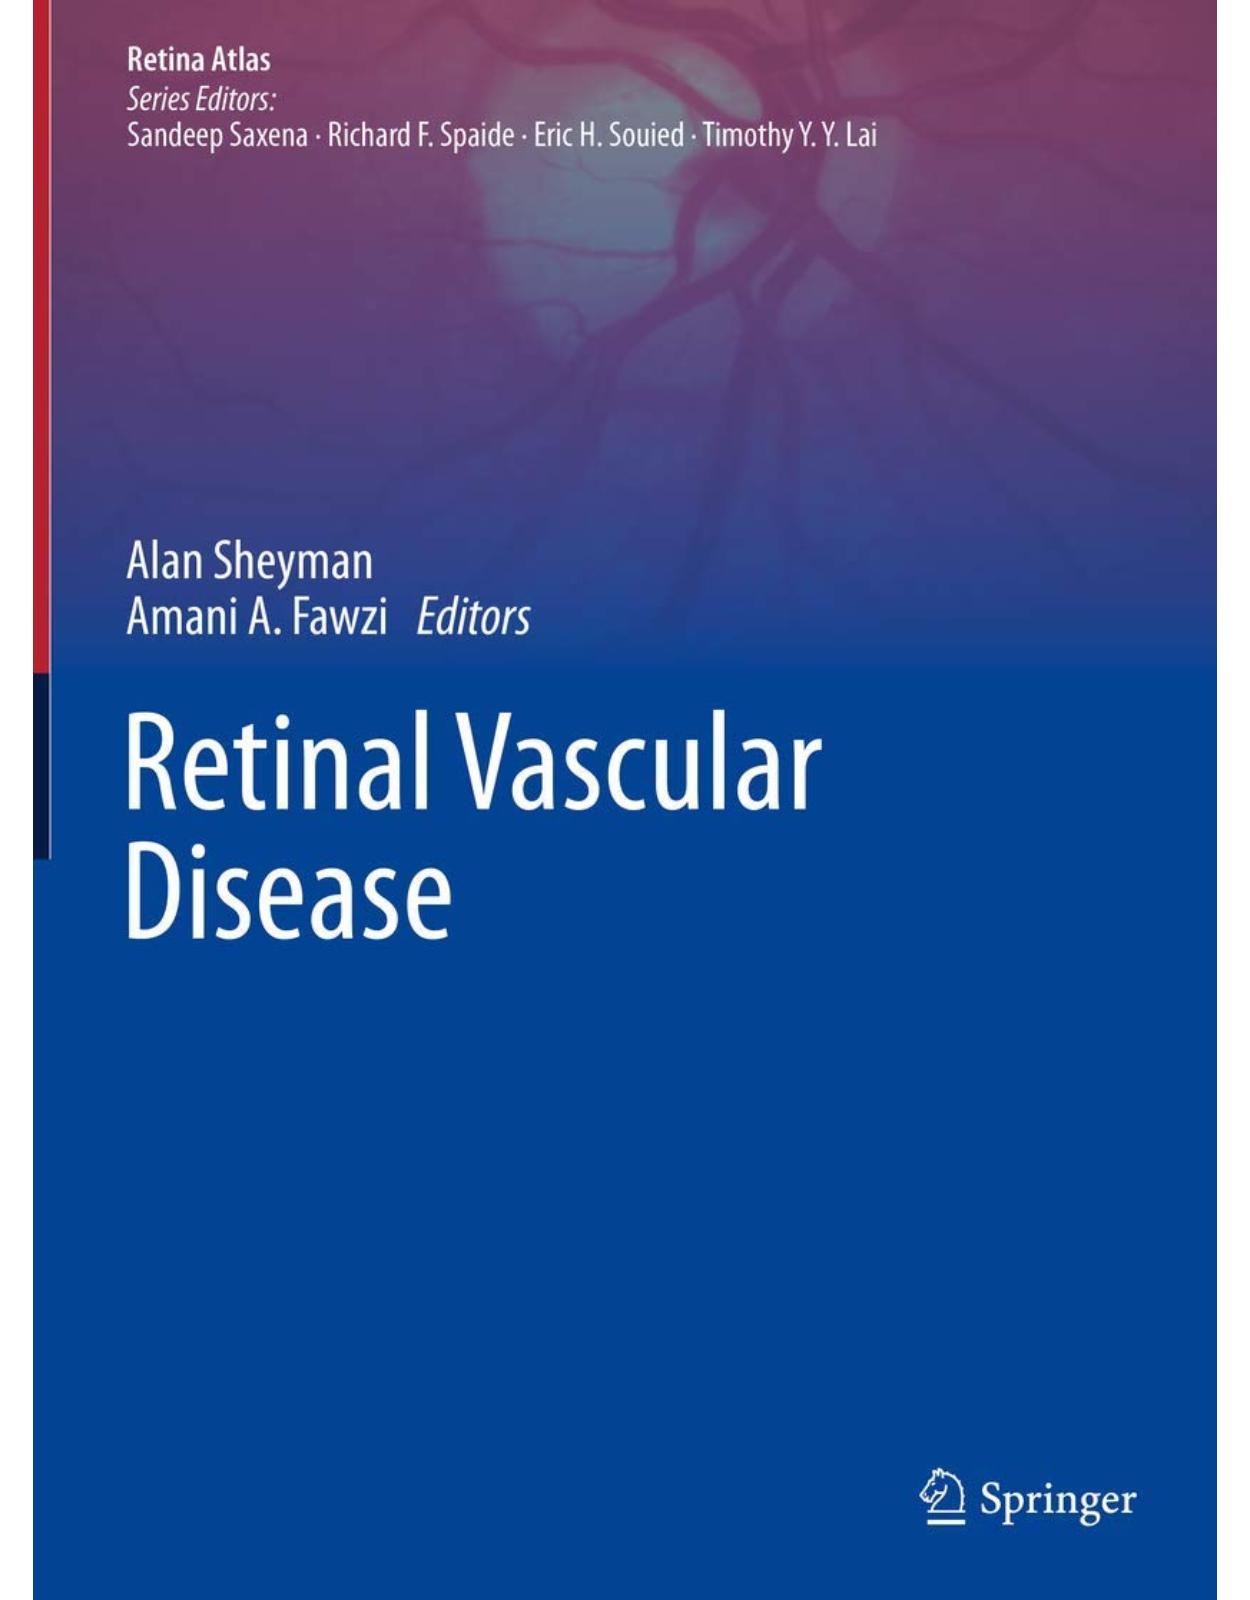 Retinal Vascular Disease (Retina Atlas)